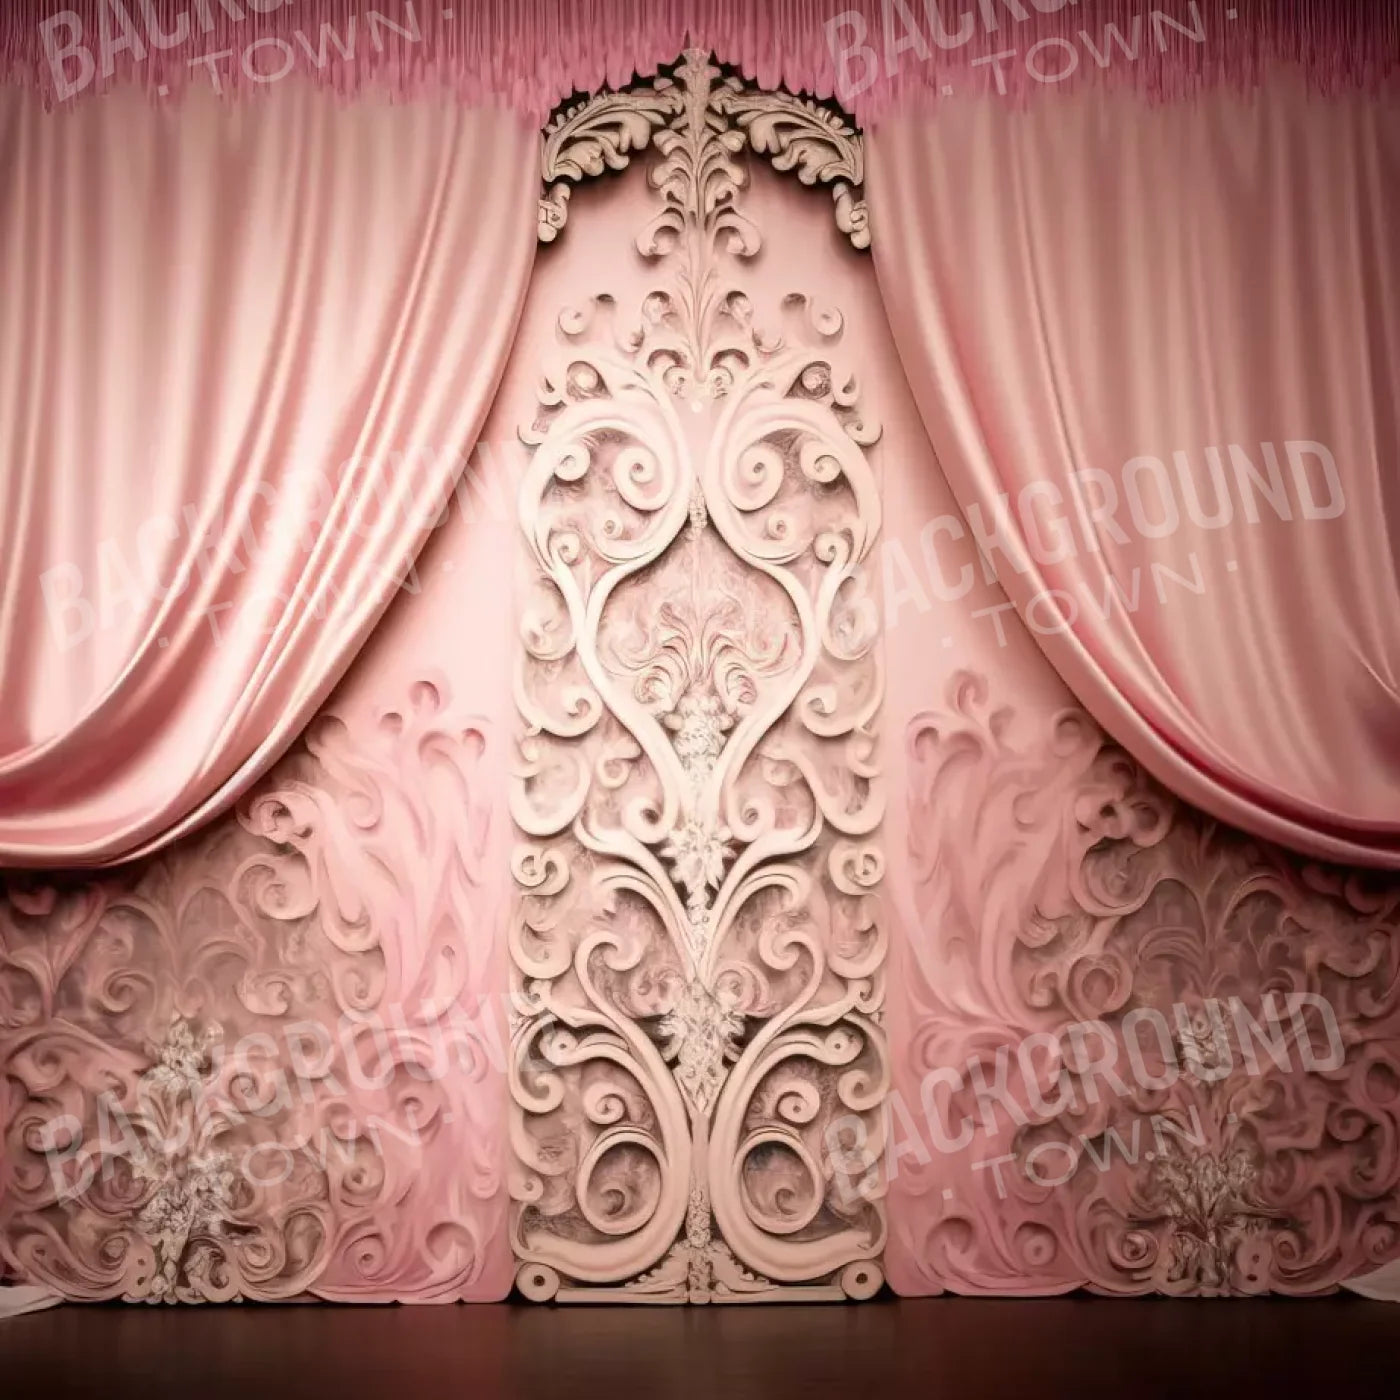 Doll House Curtains Iii 8’X8’ Fleece (96 X Inch) Backdrop